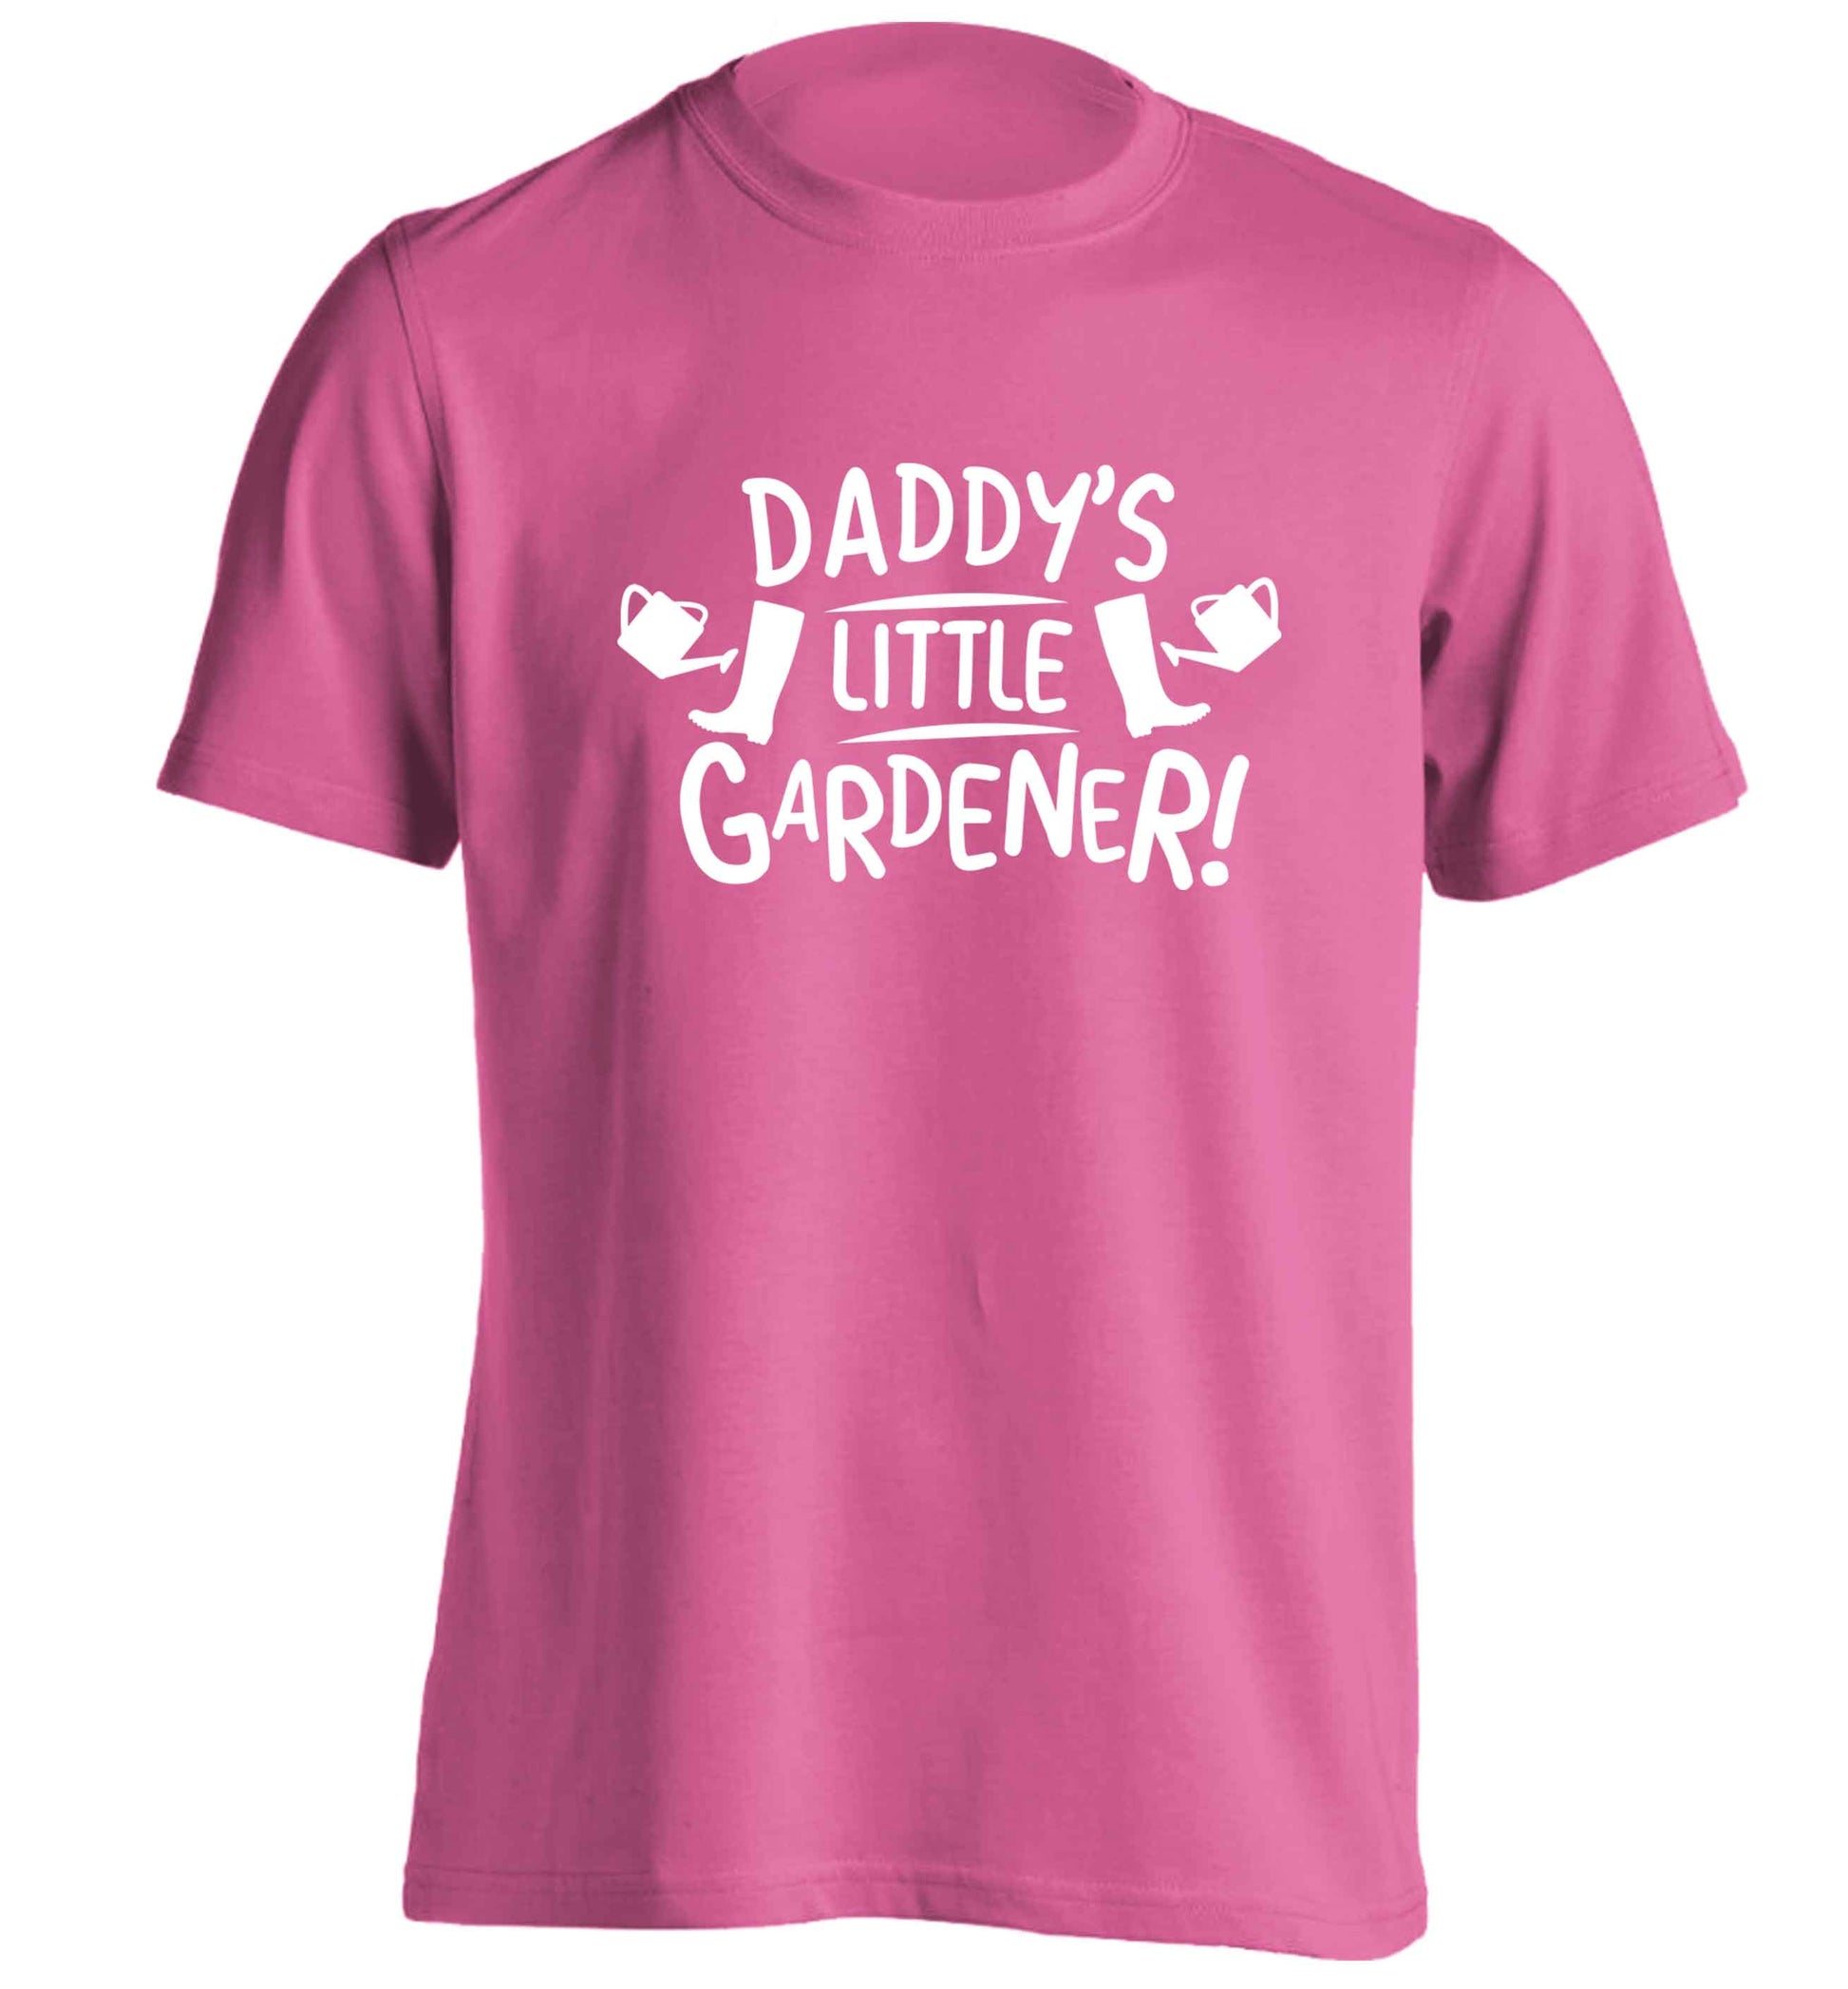 Daddy's little gardener adults unisex pink Tshirt 2XL